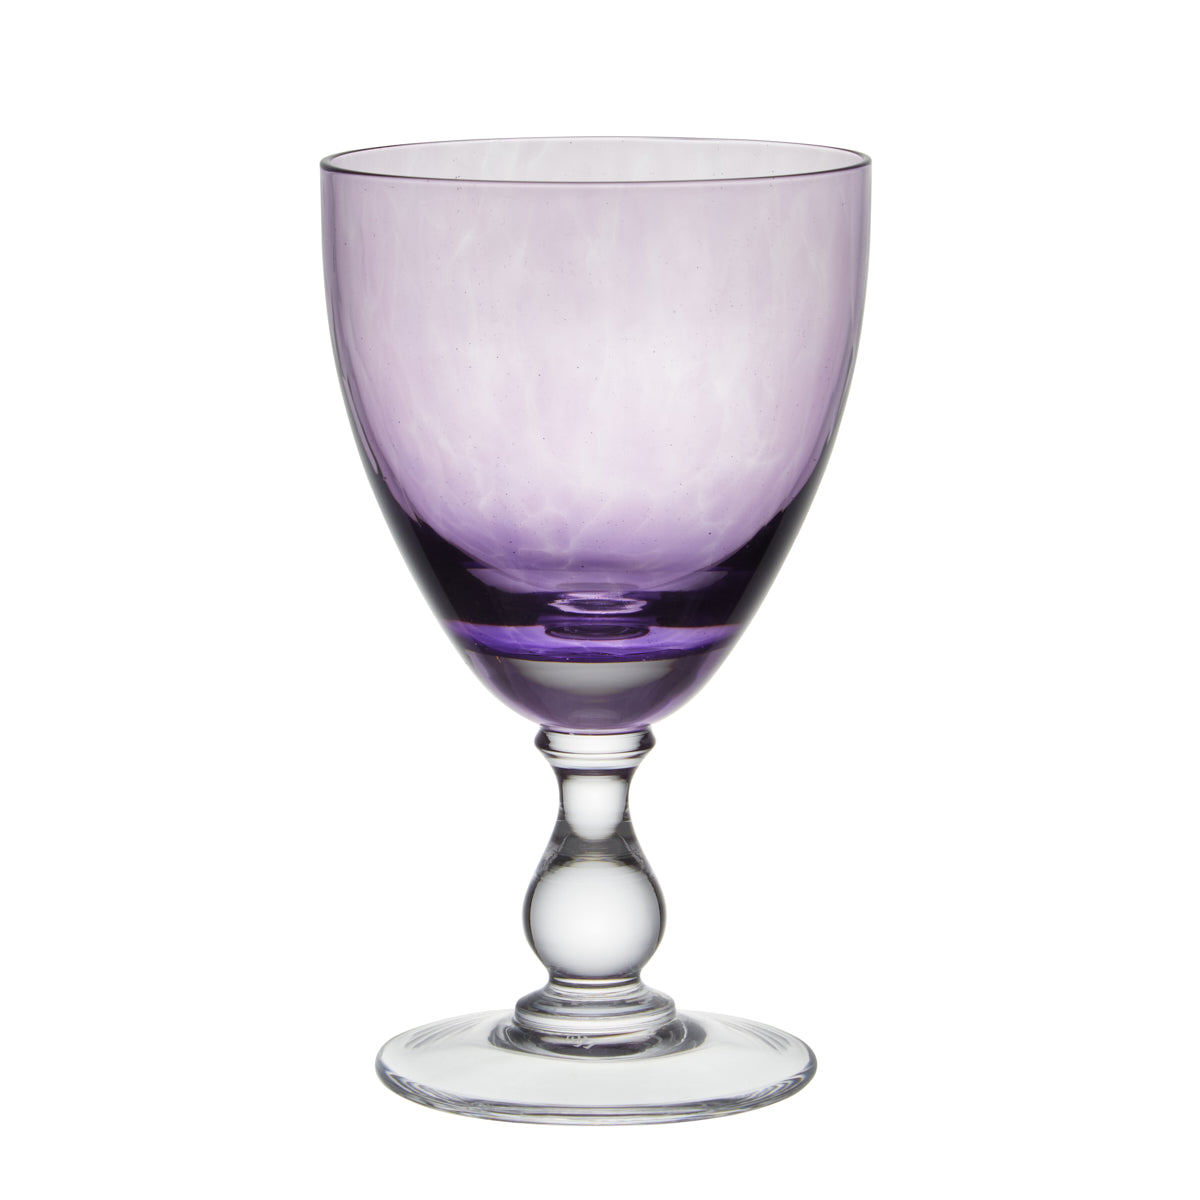 Nina Campbell Jewel Wine Glass - Amethyst